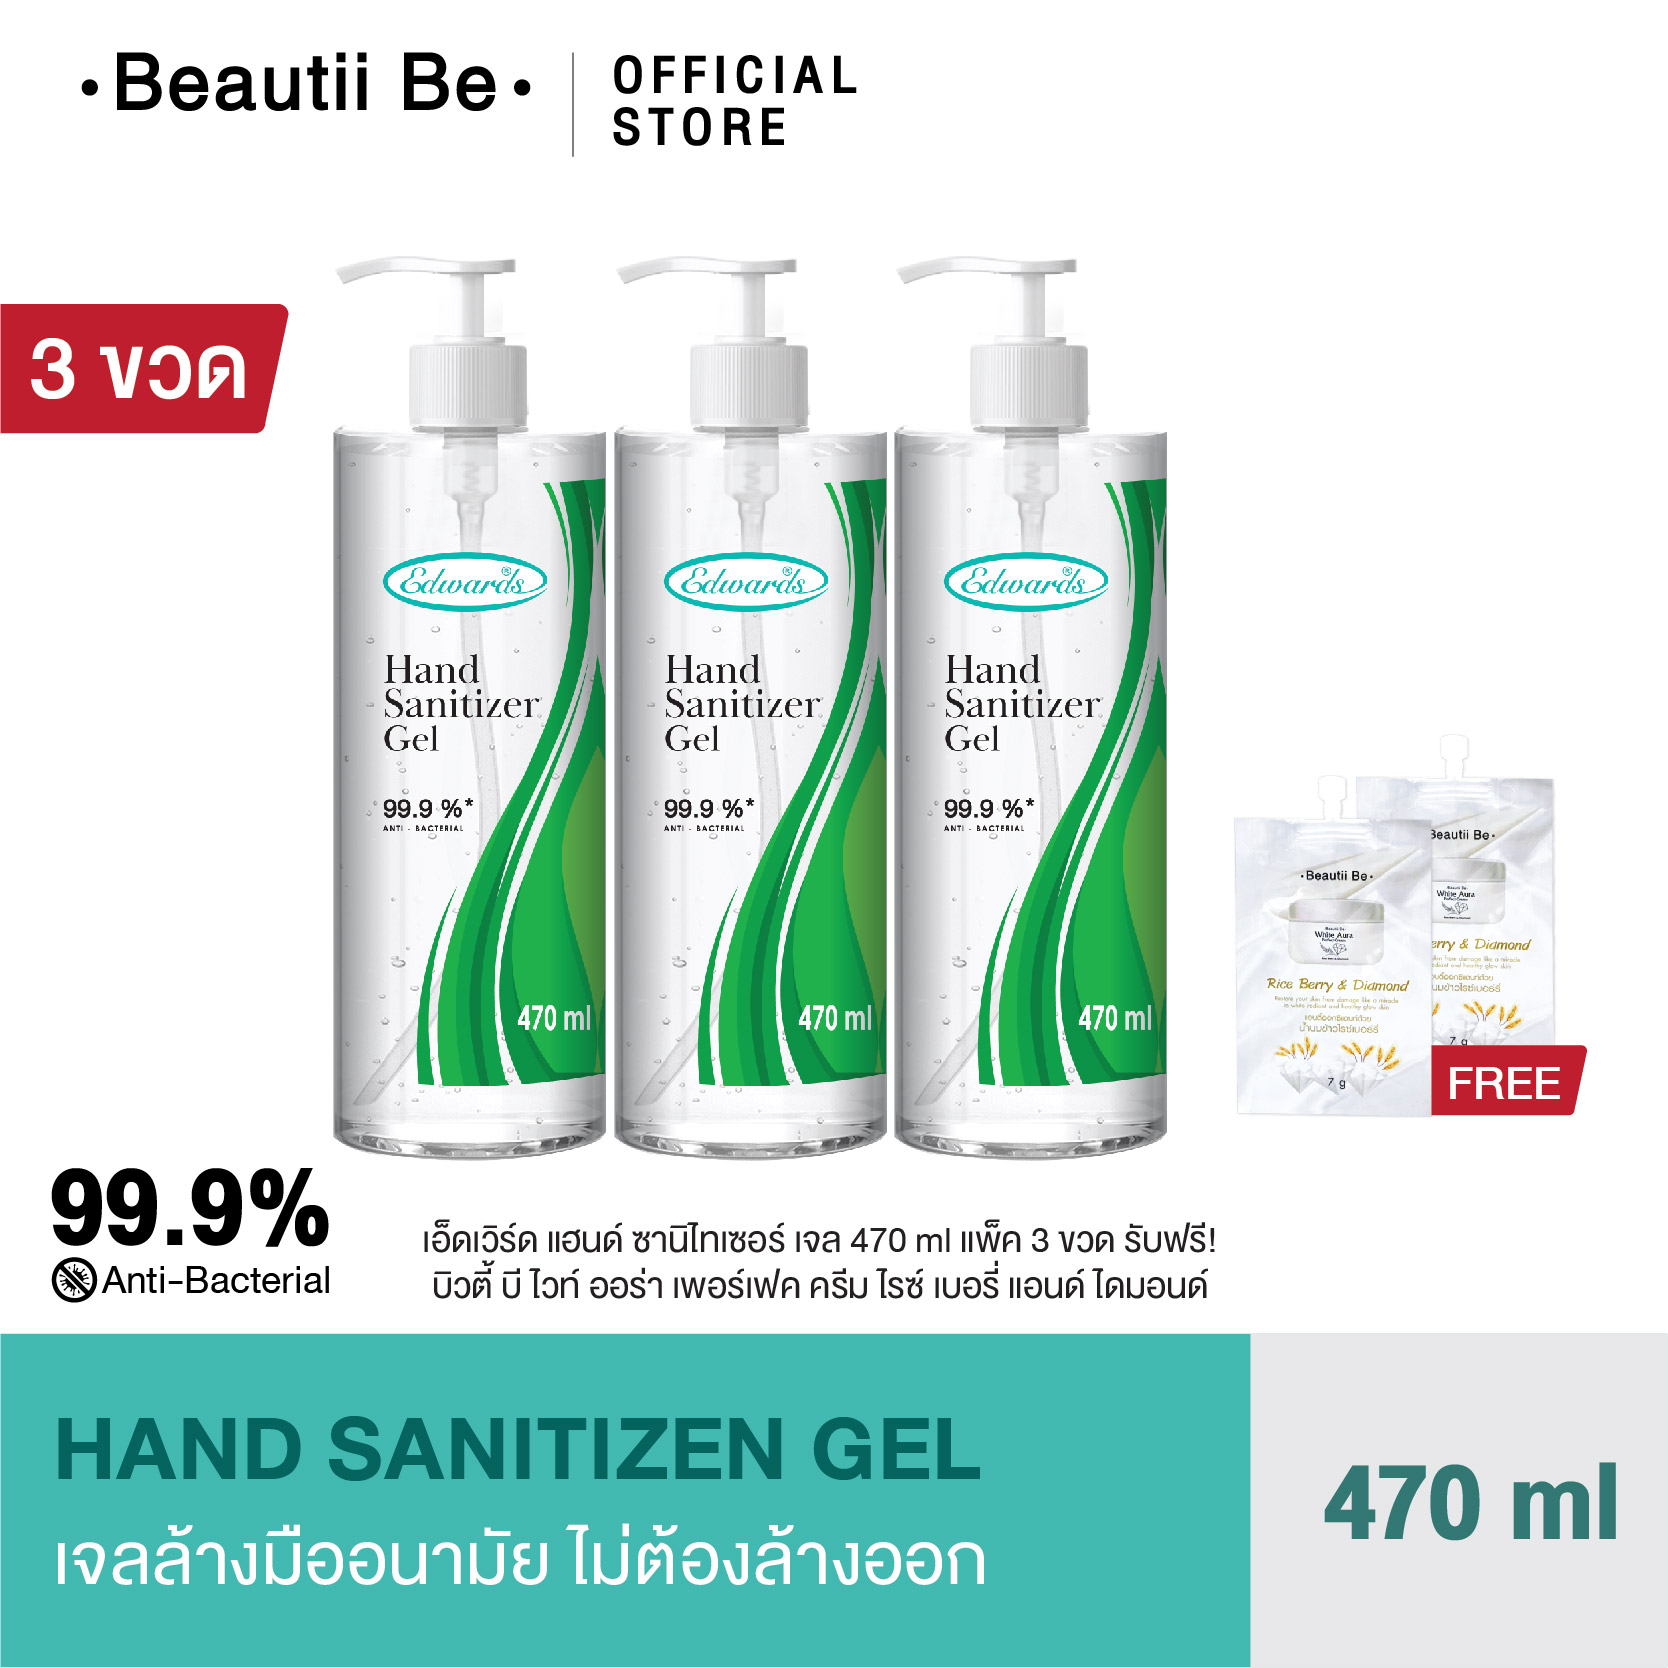 Beautii Be - Edwards Hand Sanitizer Gel [470ml.] เจลล้างมือ 99.9% Anti Bacterialx3pcs.+แถมครีมไวท์ออร่าไรซ์เบอรรี่2ซอง